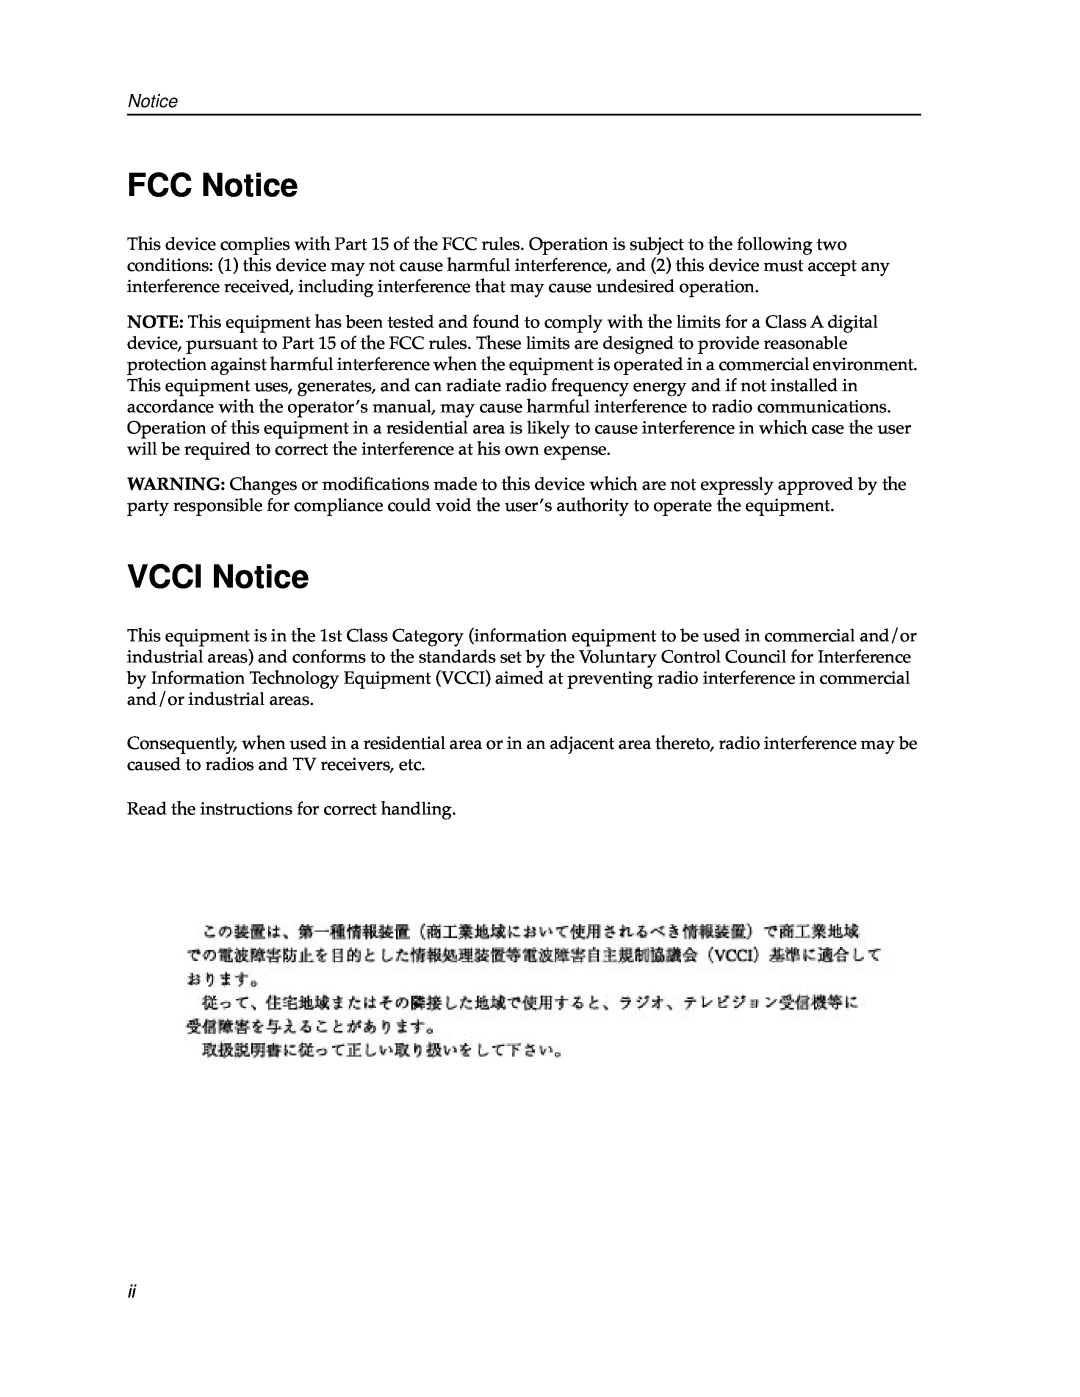 Cabletron Systems 9A000 manual FCC Notice, VCCI Notice 